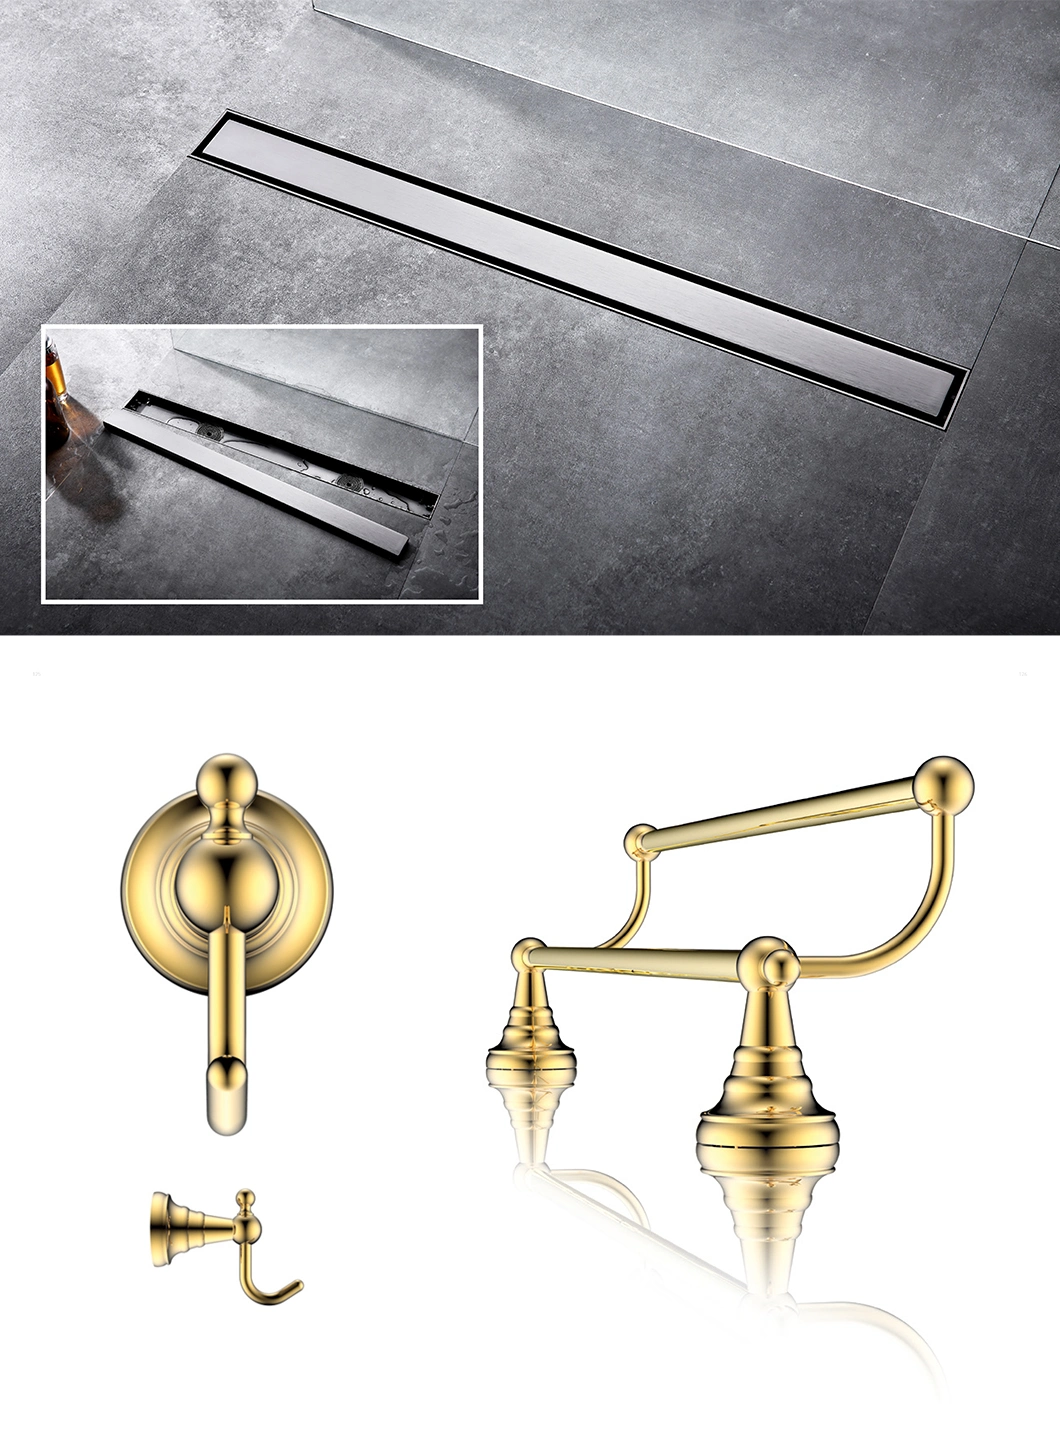 Ablinox Factory Precision Casting Hardware Hand Rail Bathroom Accessories